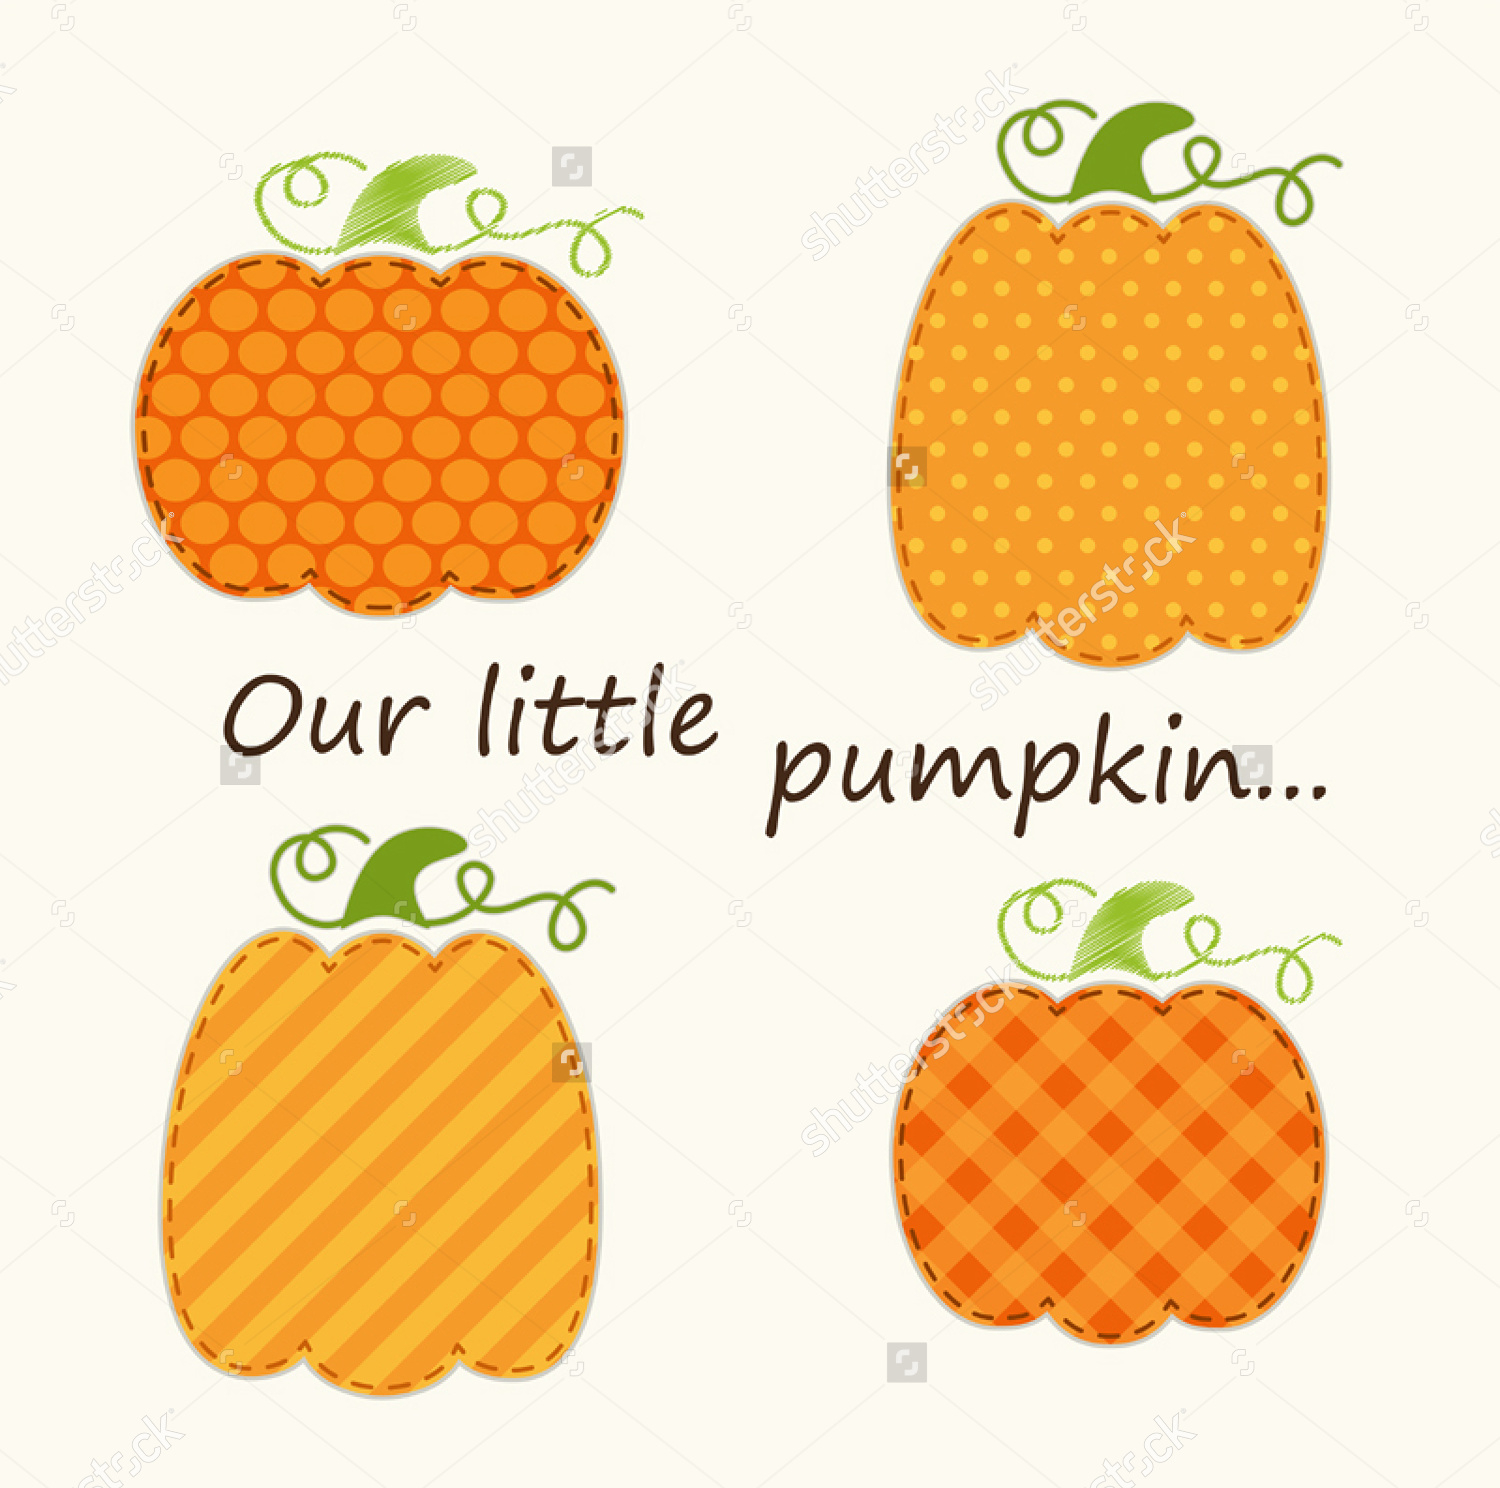 printable pumpkin design download hq